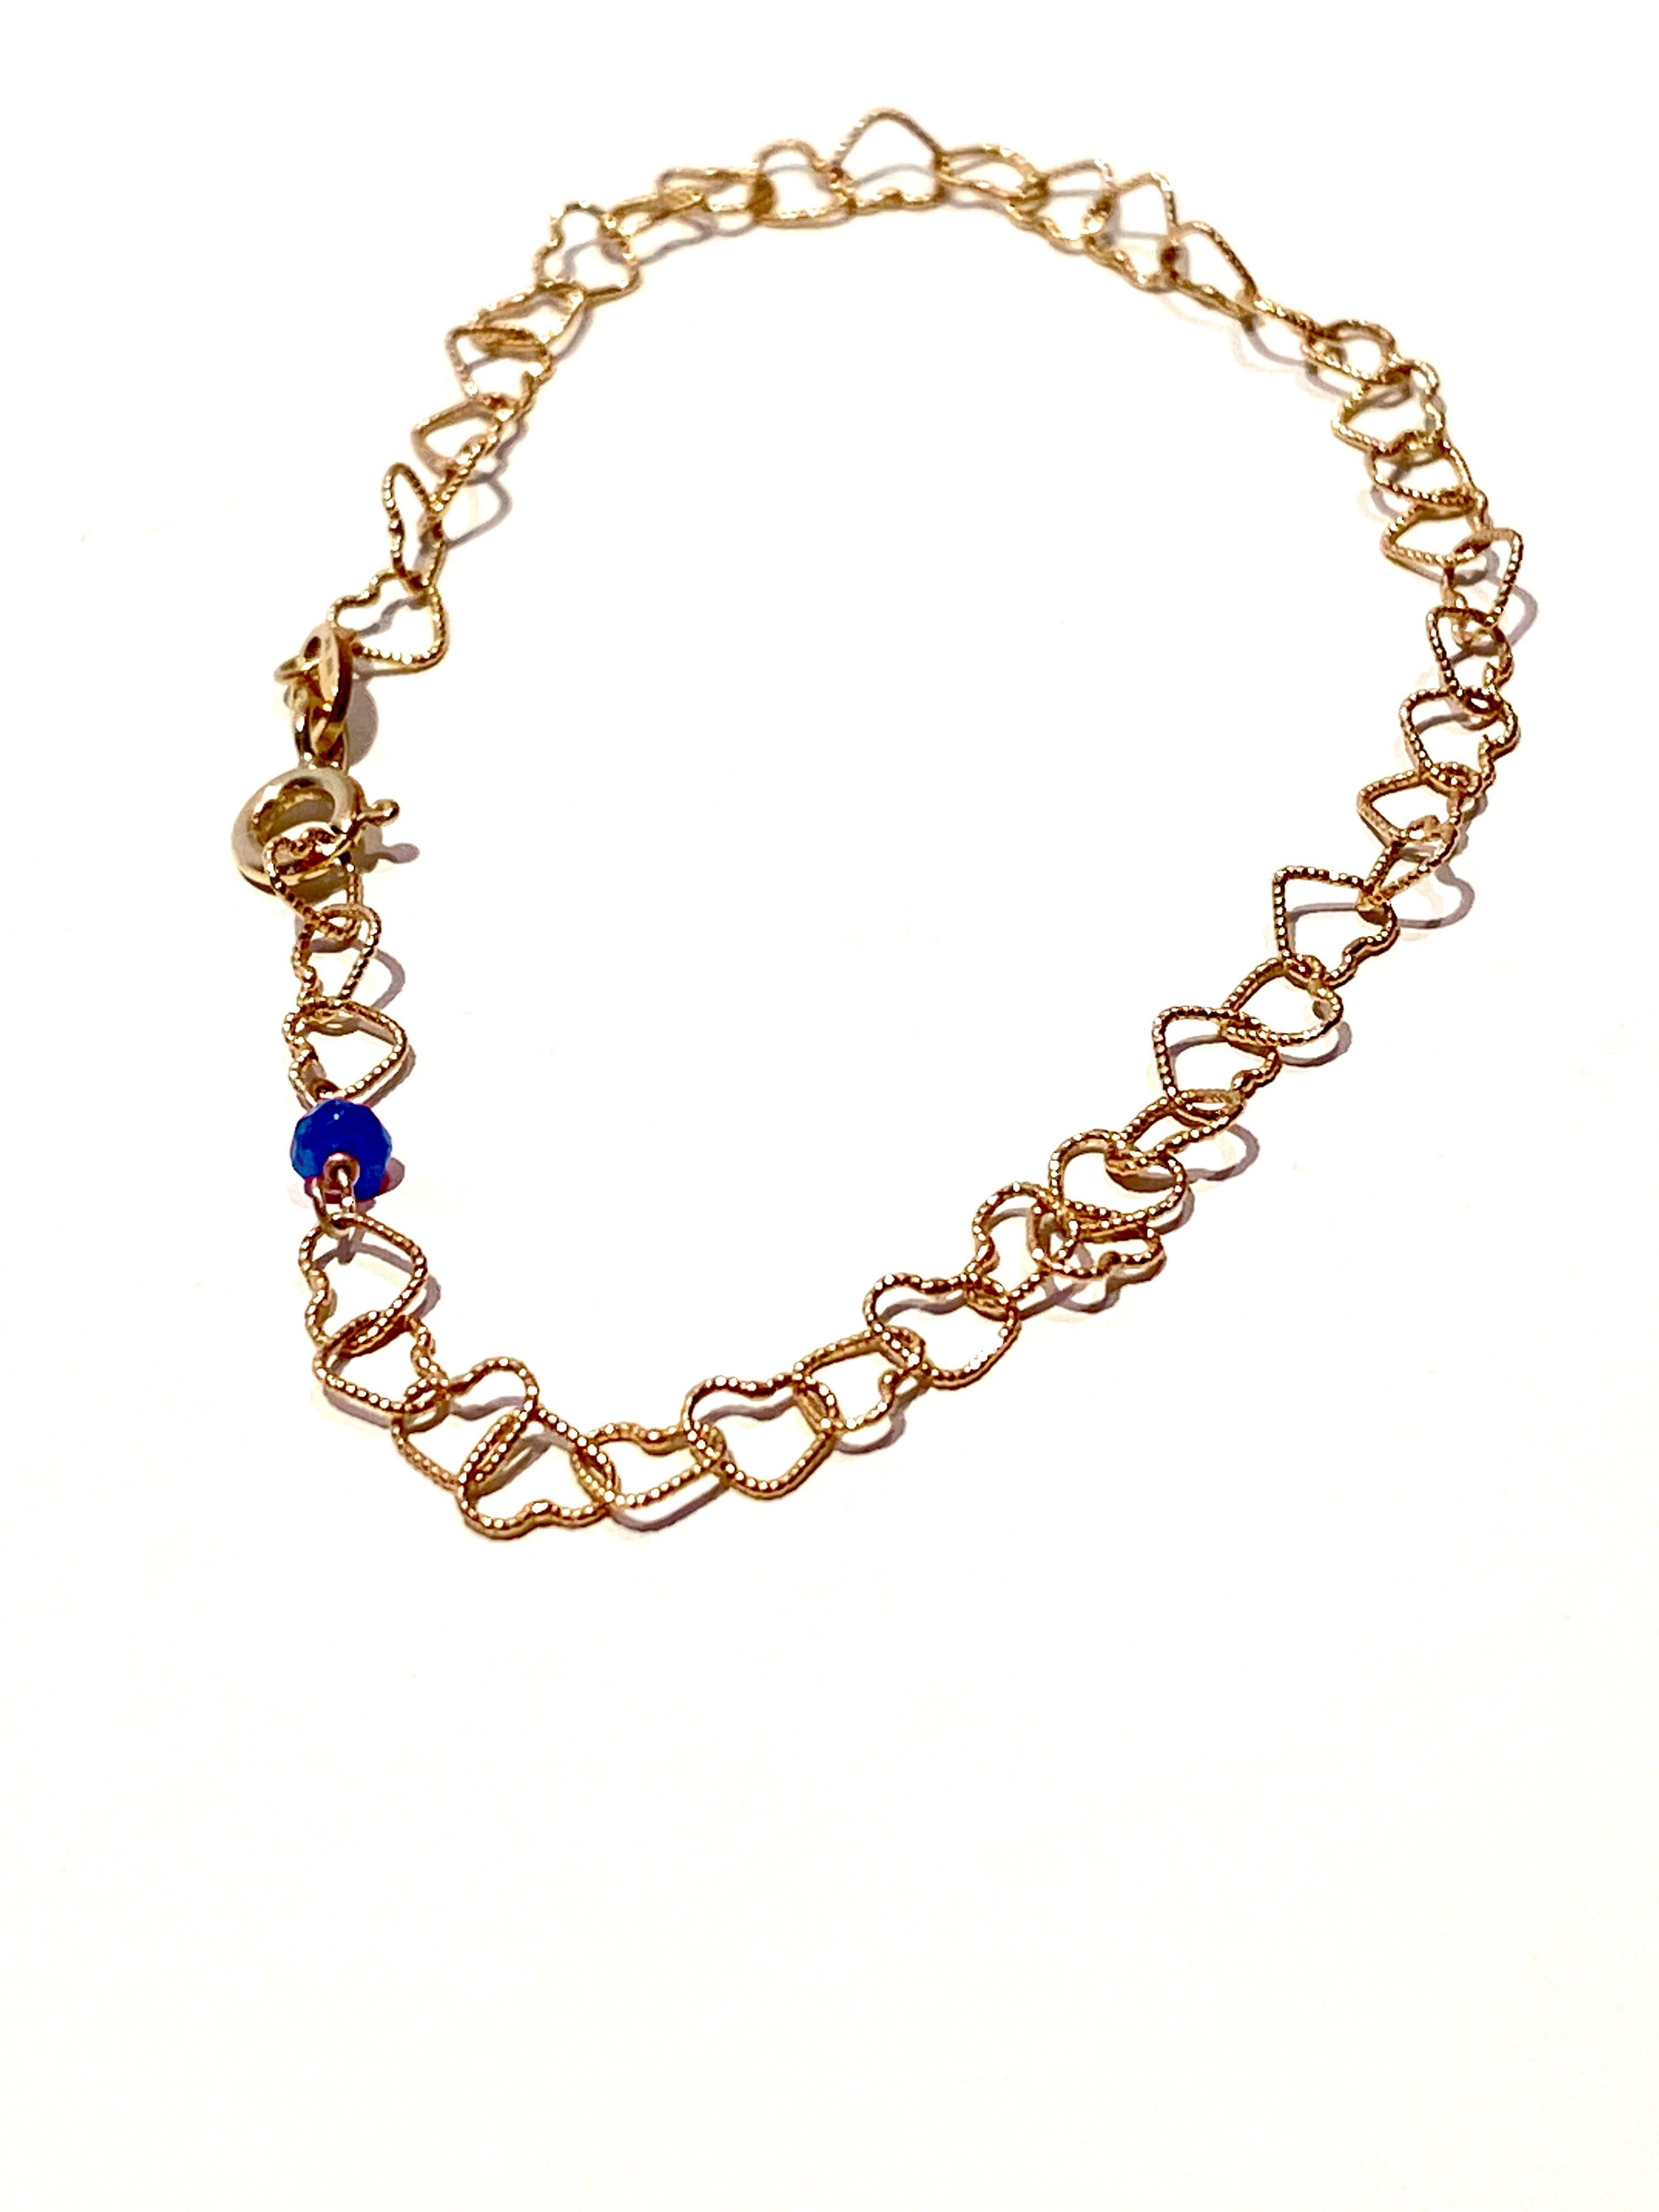 0.30 Carats Sapphires Romantic Style 18 Karat Yellow Gold Hearts Unisex Bracelet For Sale 1